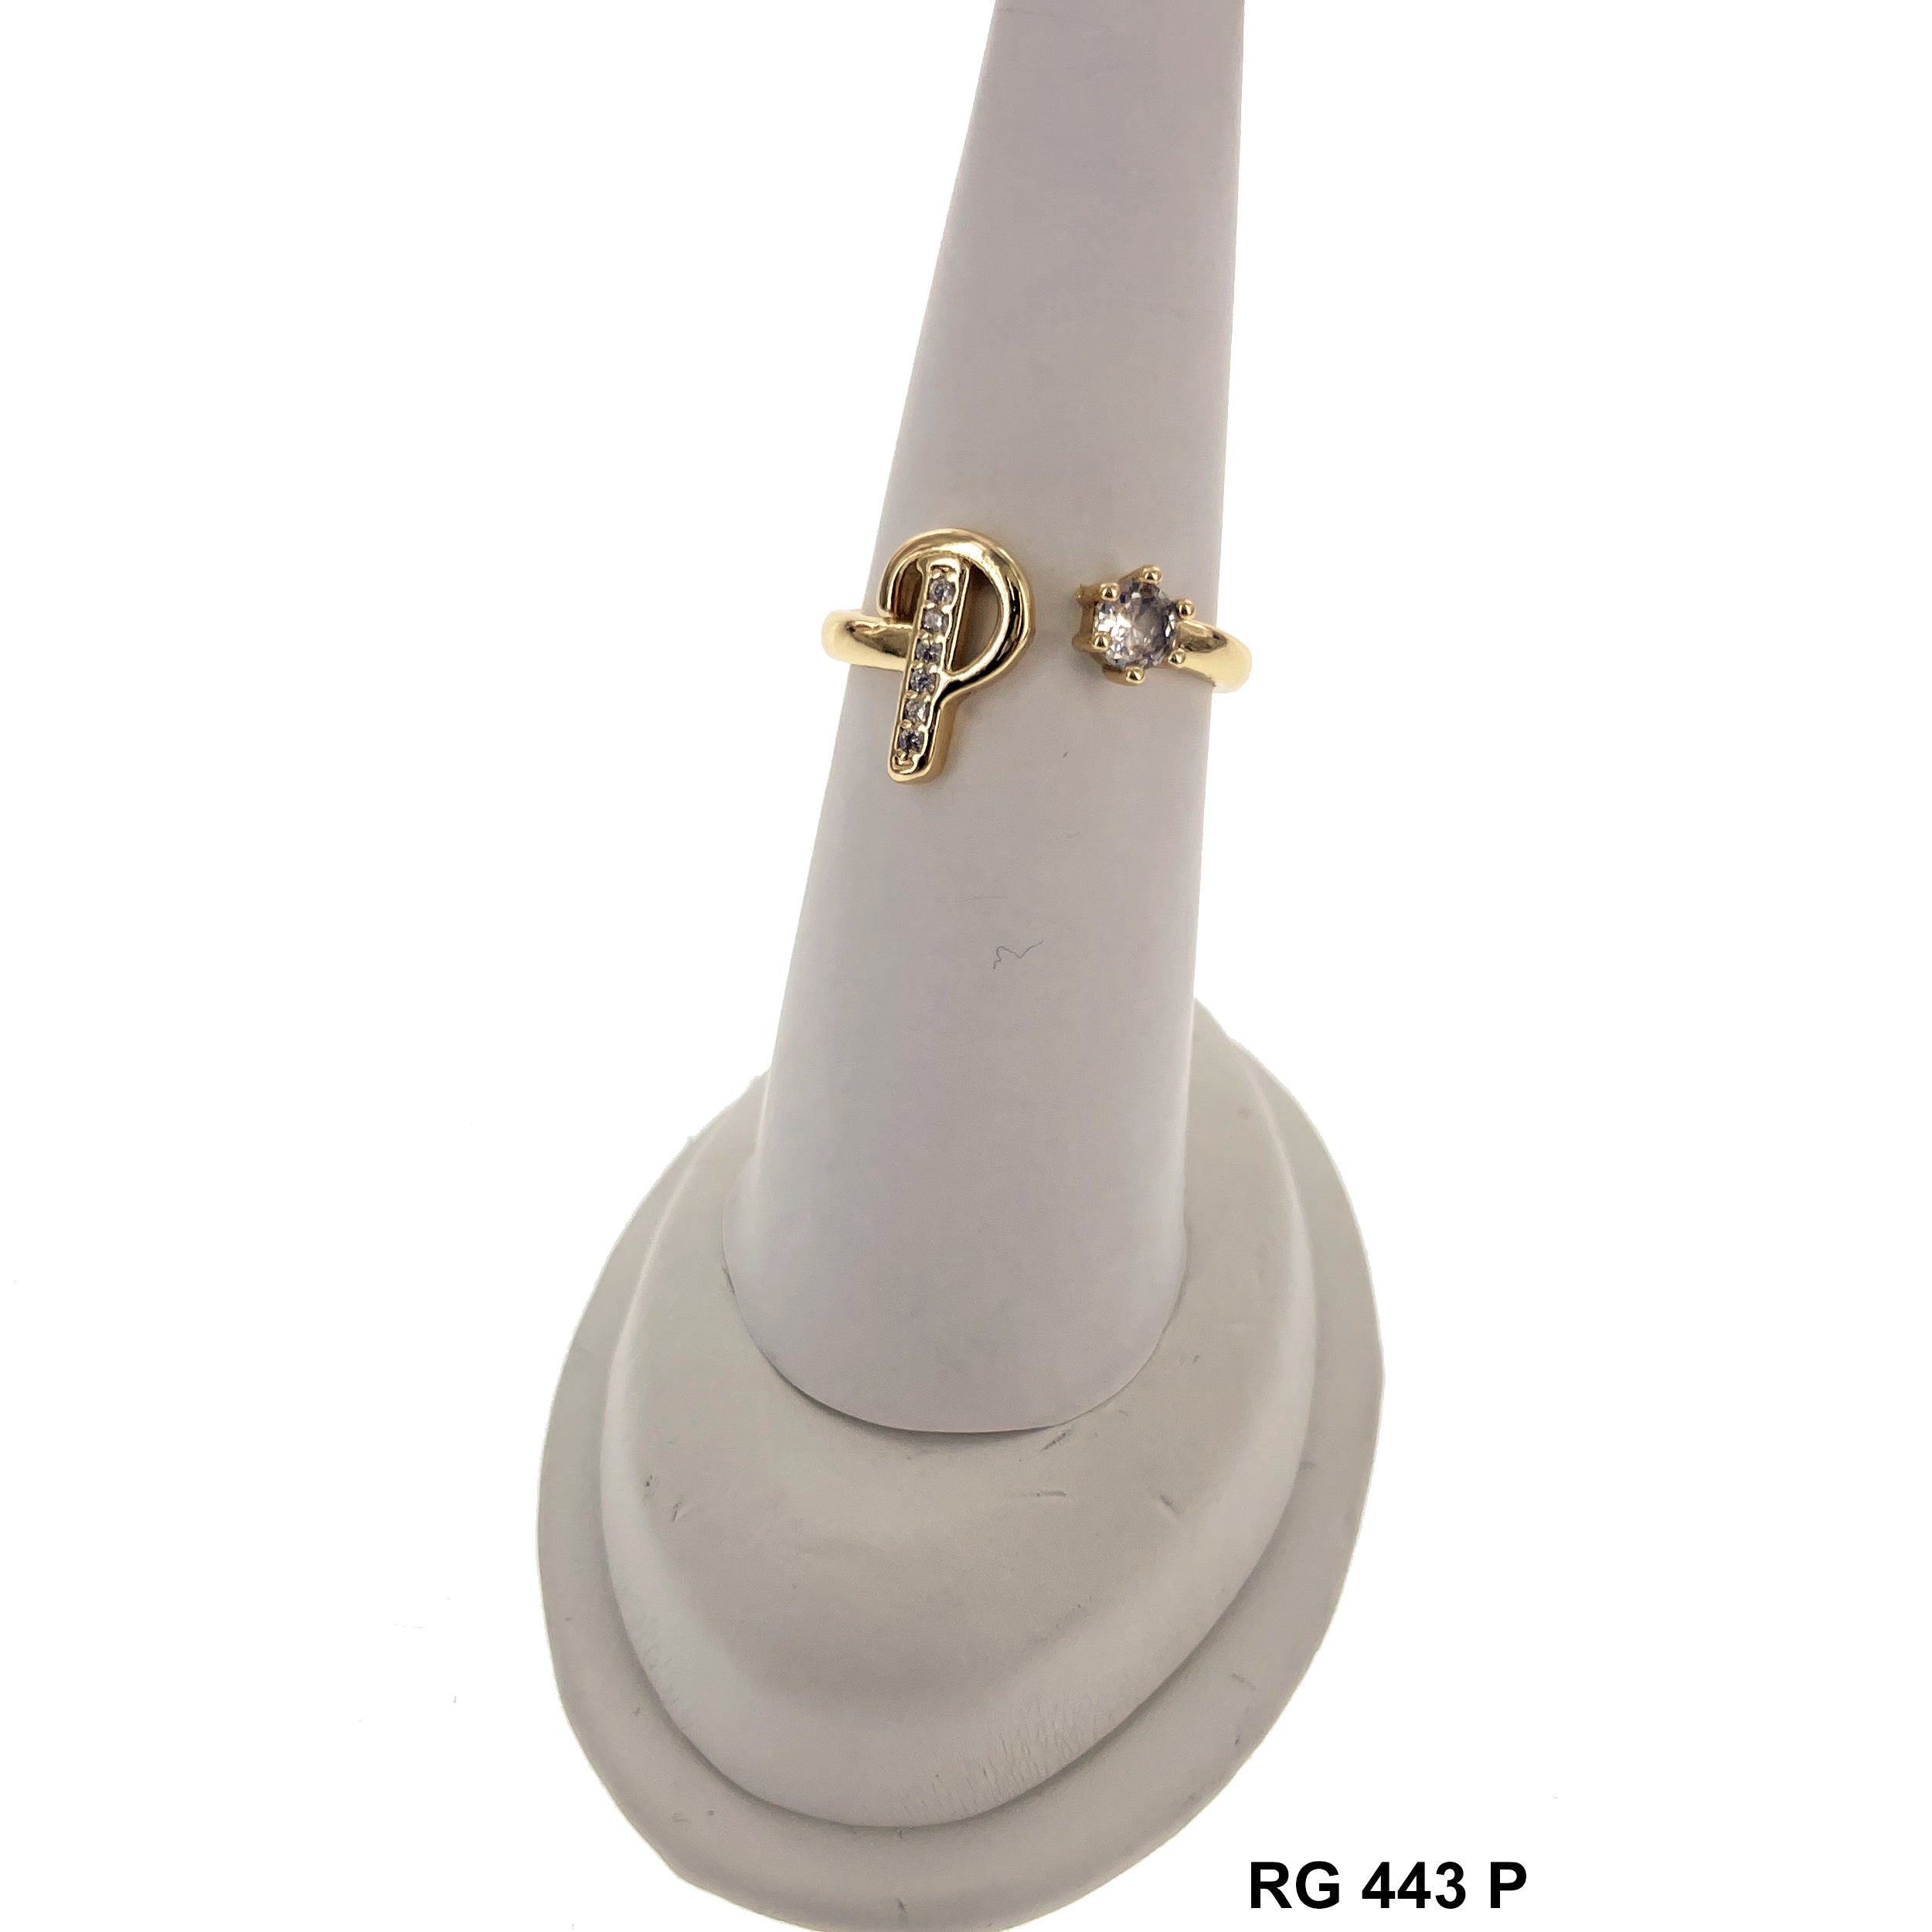 Initial Adjustable Ring RG 443 P